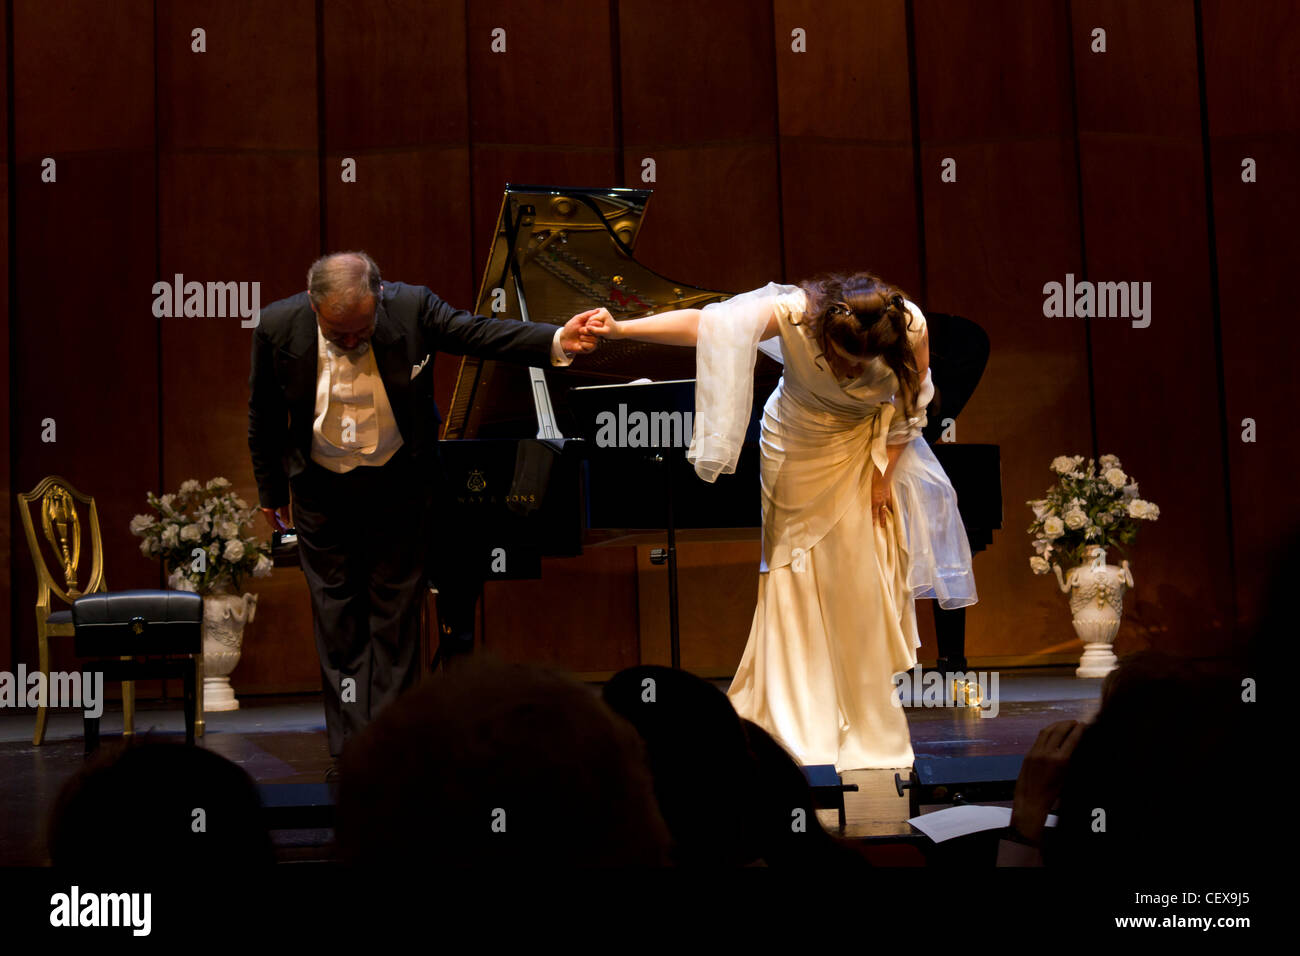 curtain call of opera singer Diana Damrau and pianist Helmut Deutsch, Deutsche Oper, Berlin, Germany Stock Photo